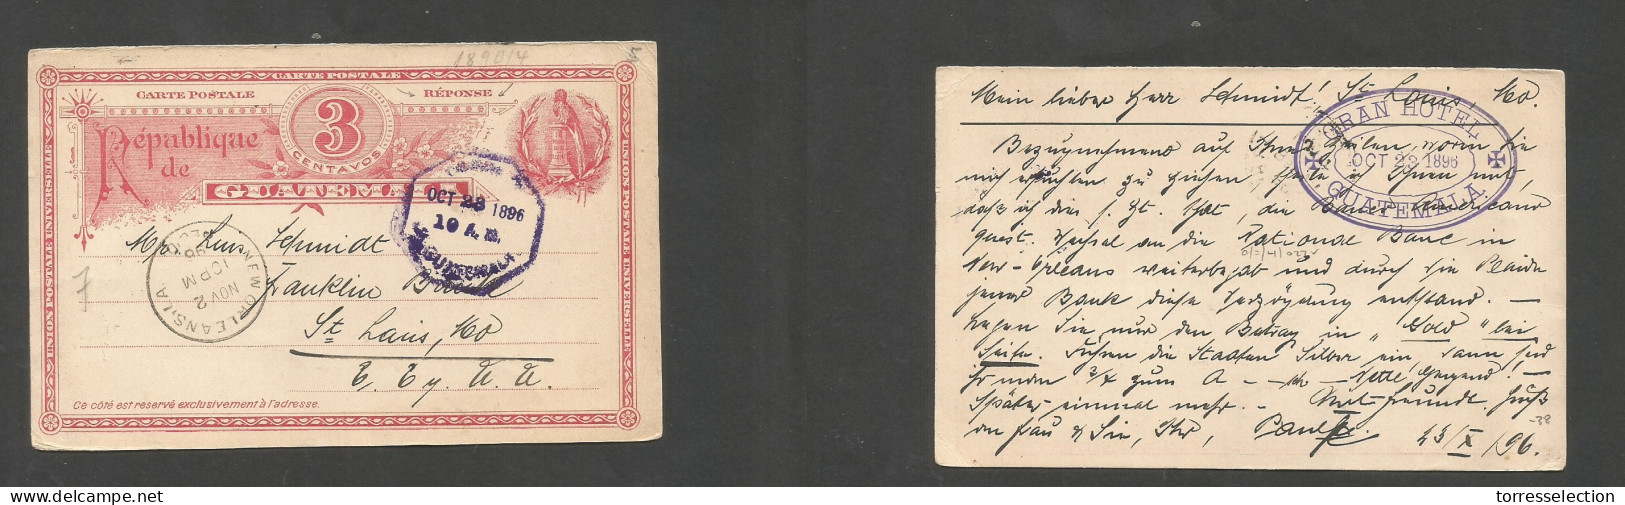 GUATEMALA. 1896 (23 Oct) Reply Stat Card. GPO - USA, St. Louis, Mo. Via New Orleans, Fine. SALE. - Guatemala